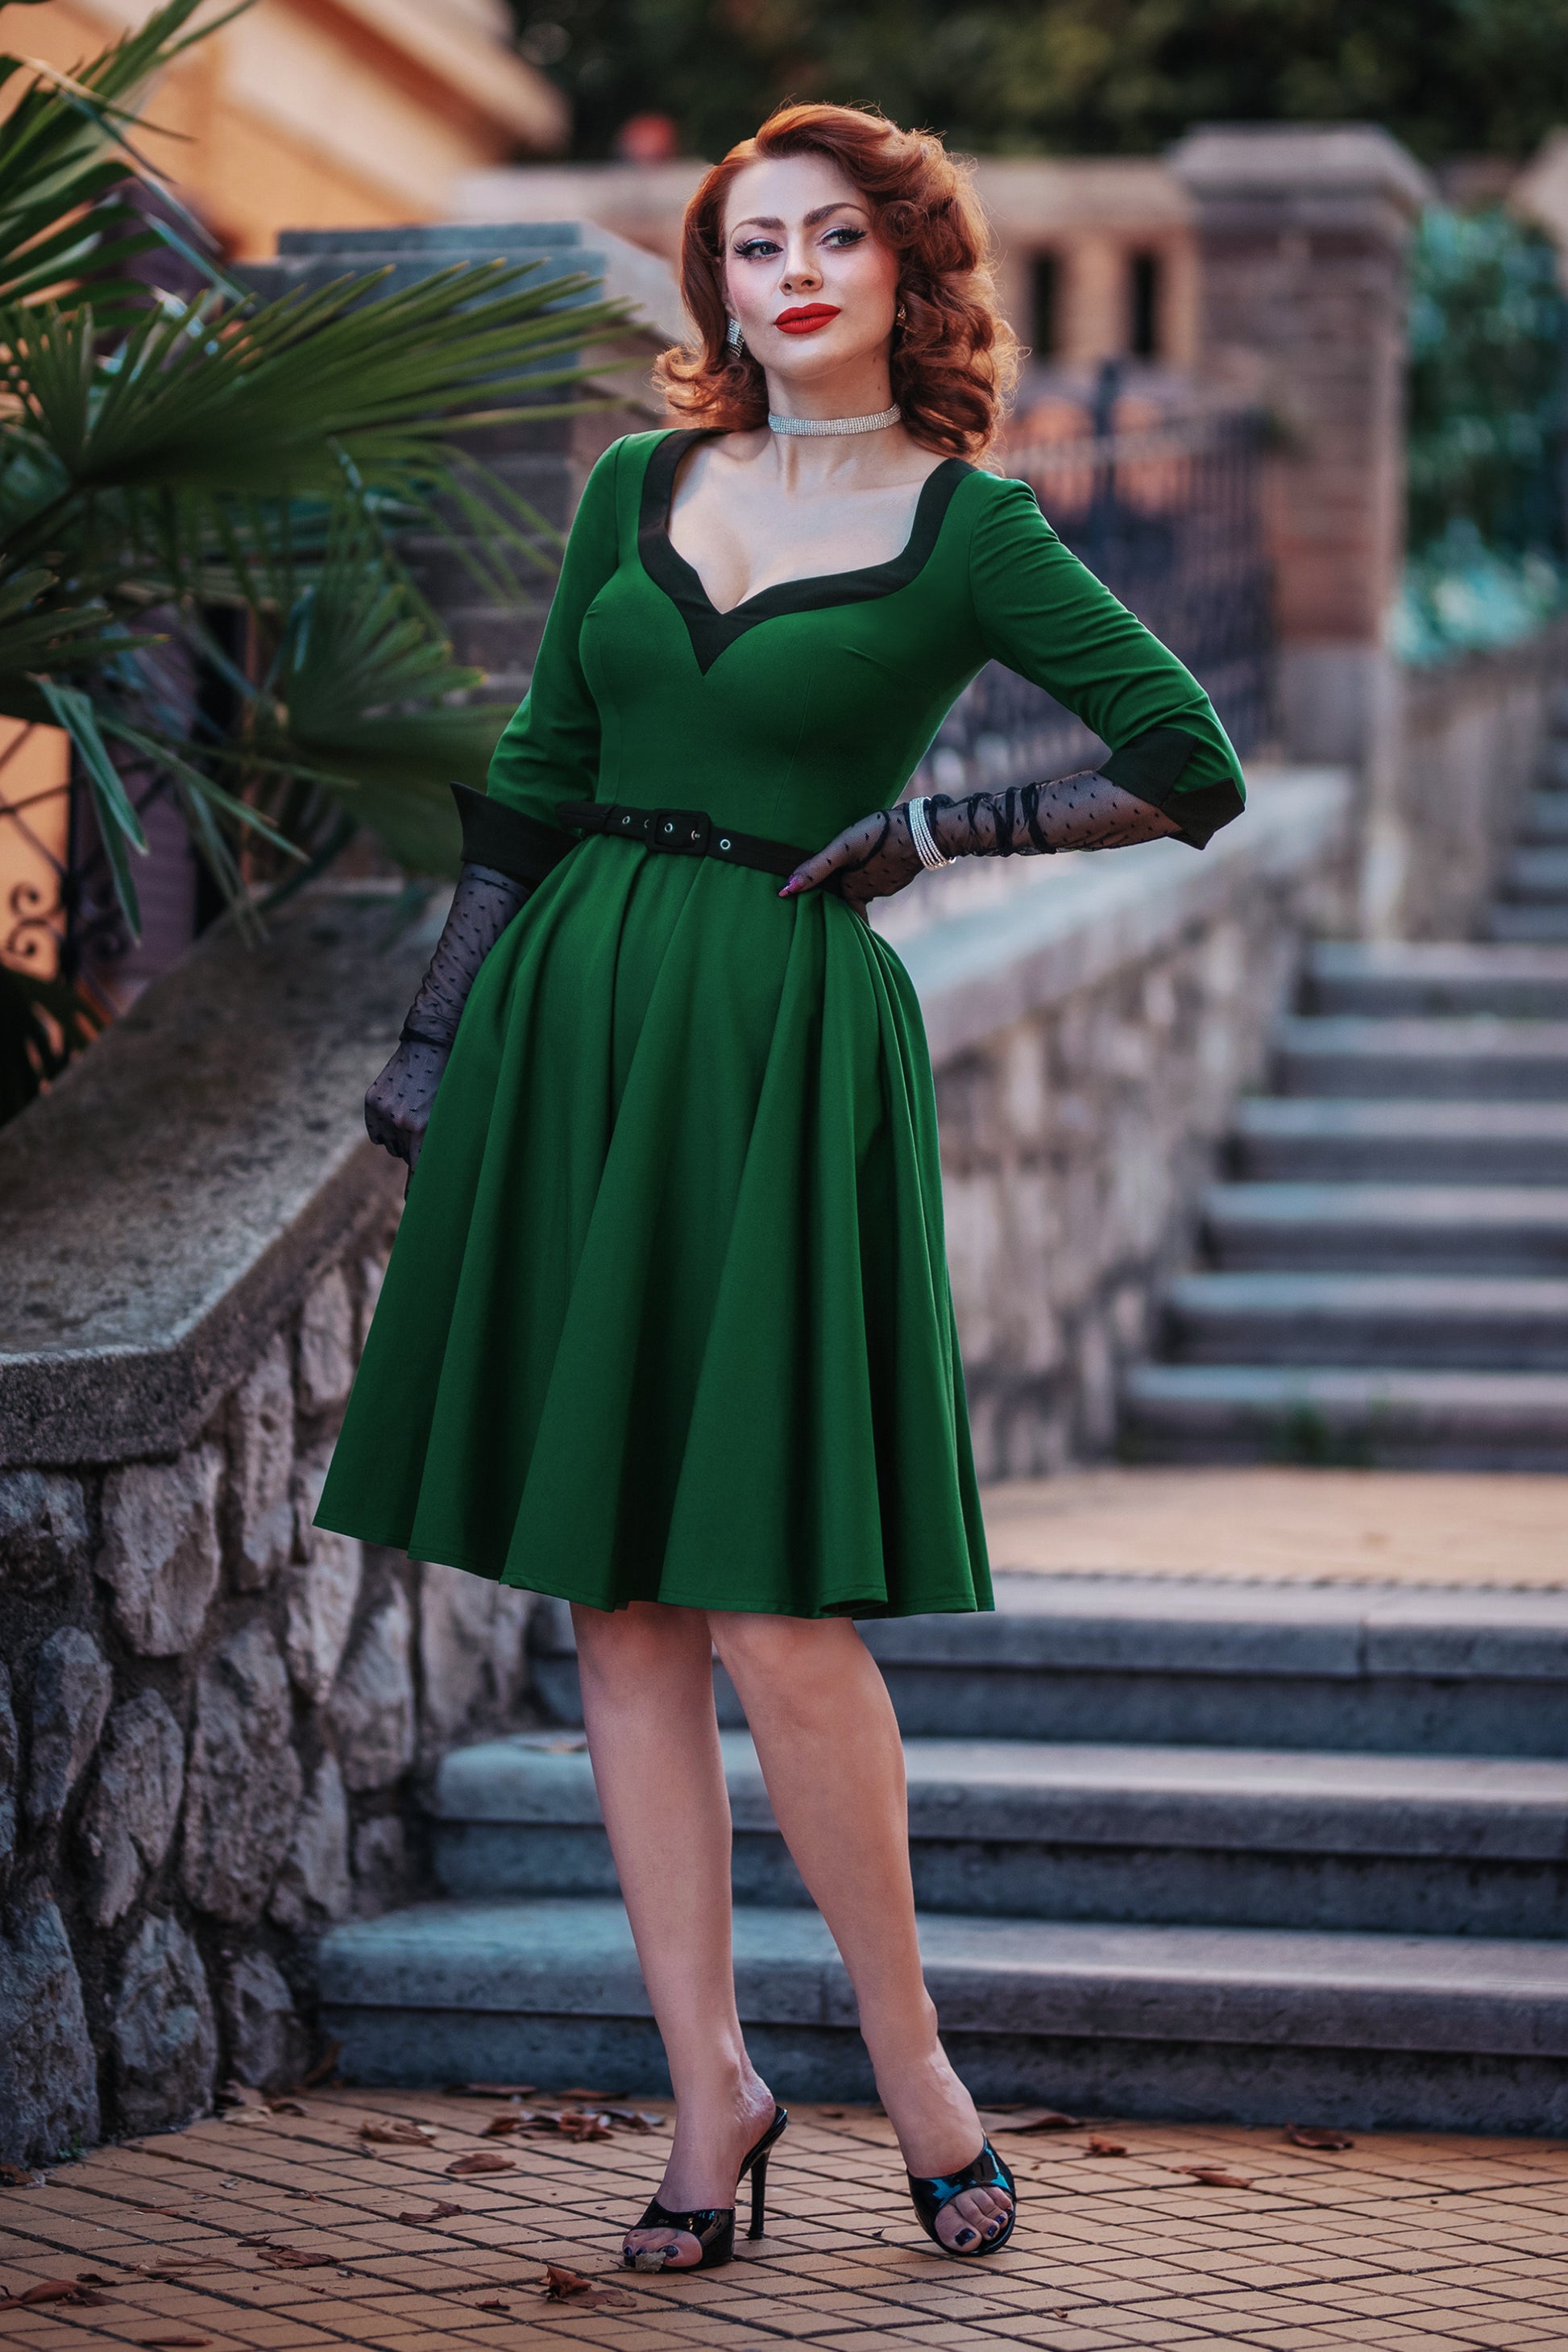 Vivienne Swing Dress in Hunter Green – Glamour Bunny